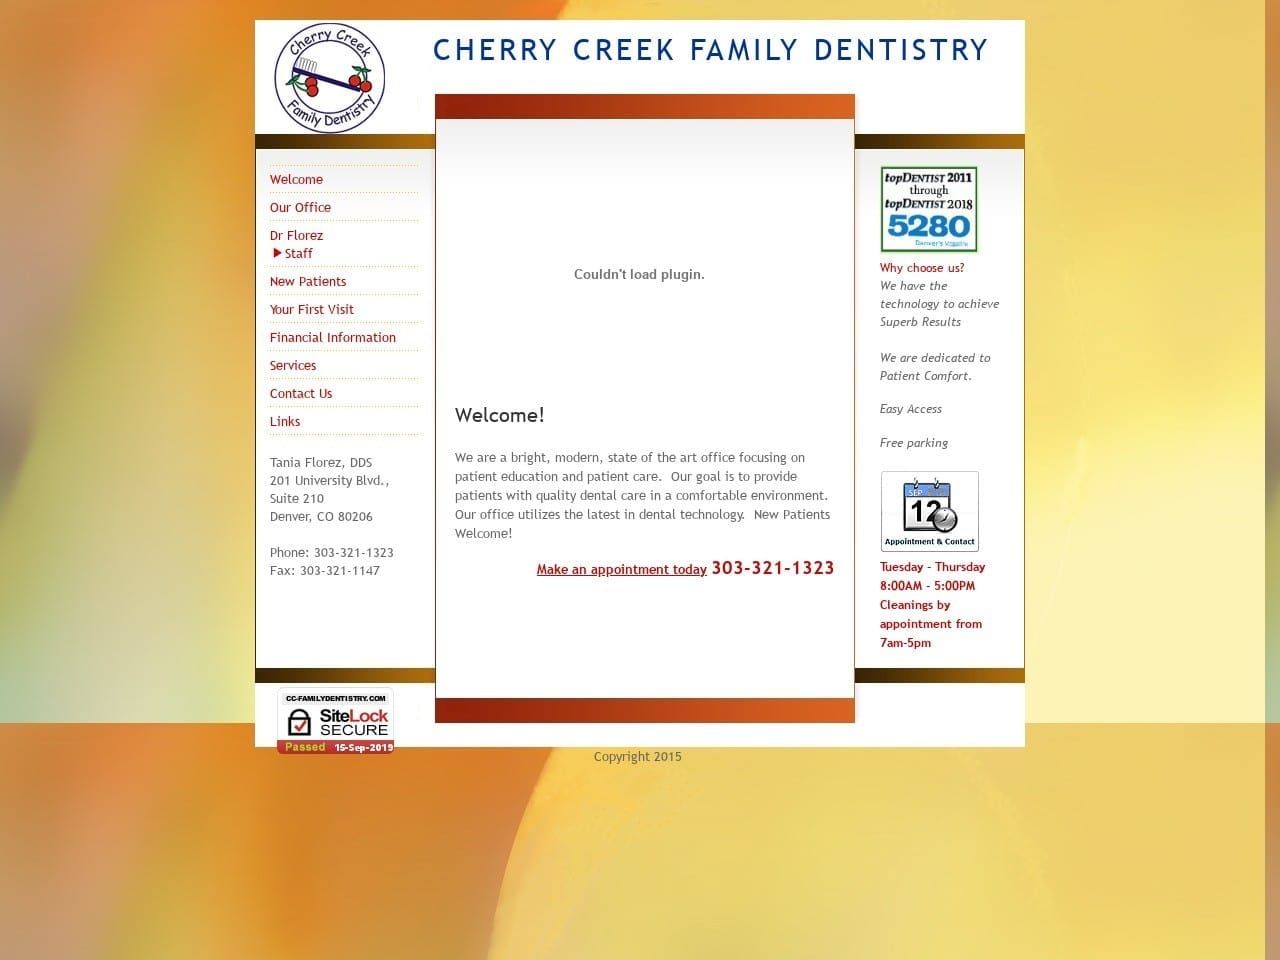 Cherry Creek Family Dentistry Website Screenshot from cc-familydentistry.com